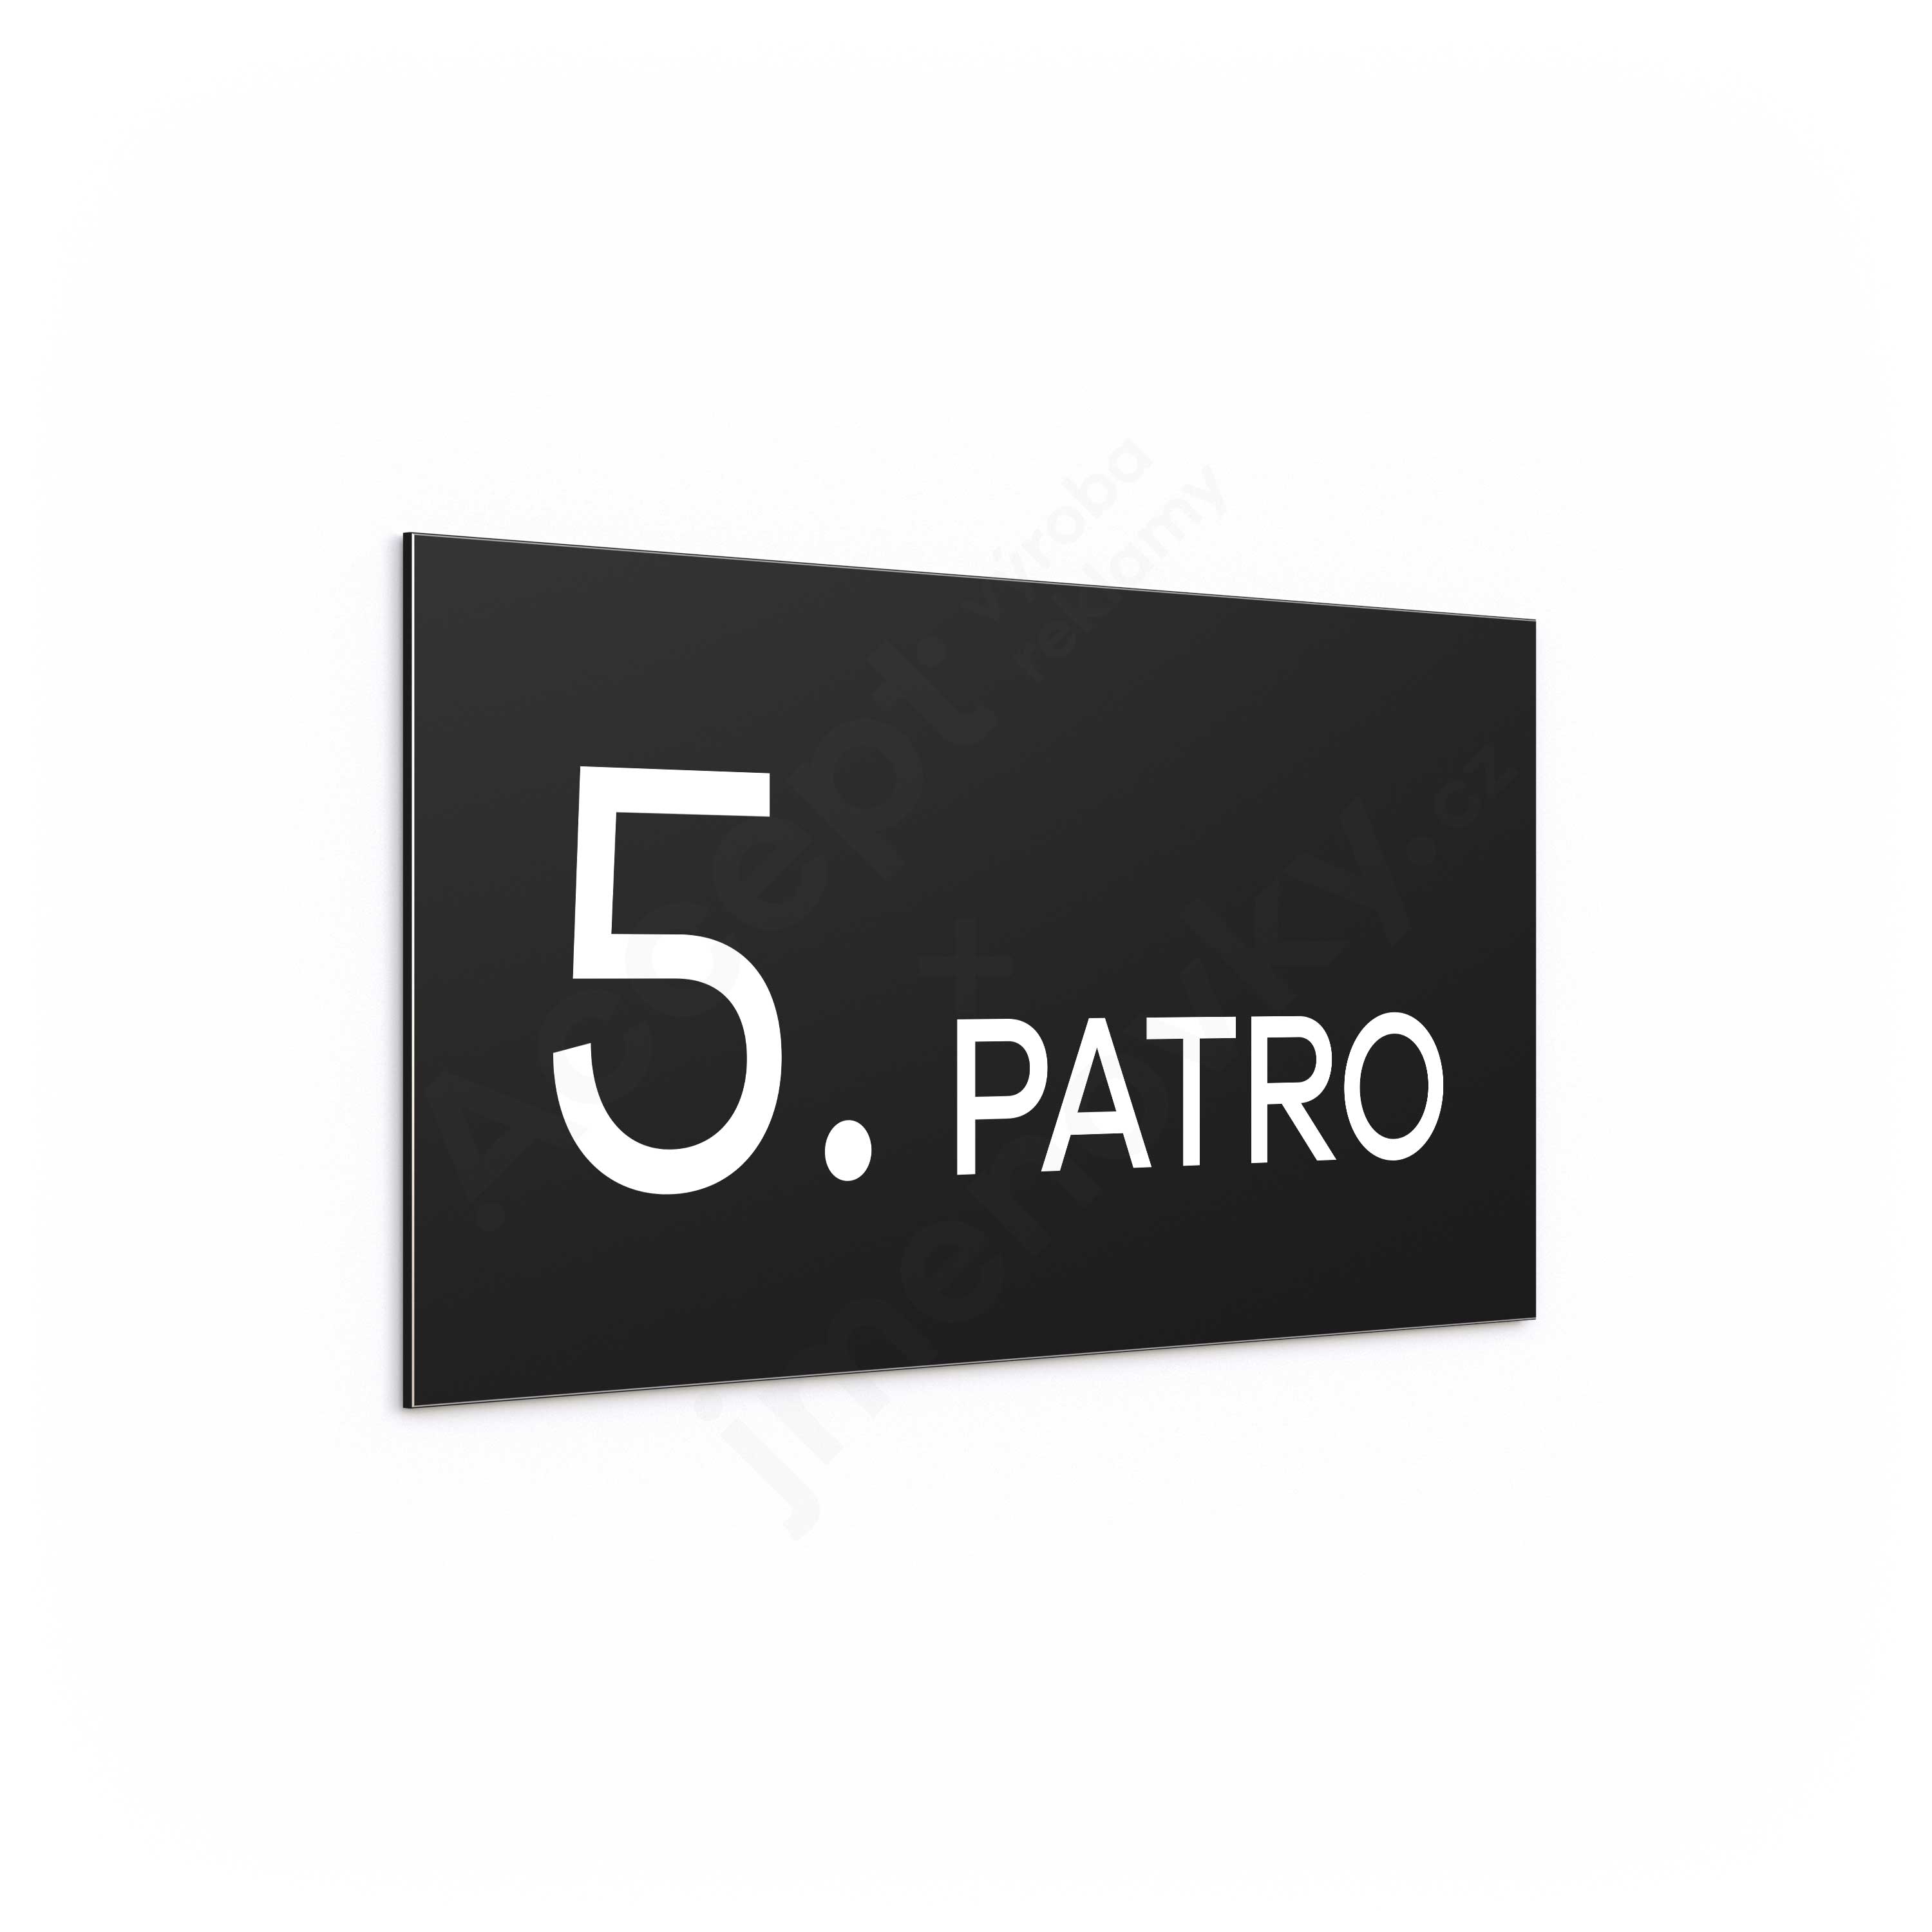 Označení podlaží "5. PATRO" - černá tabulka - bílý popis